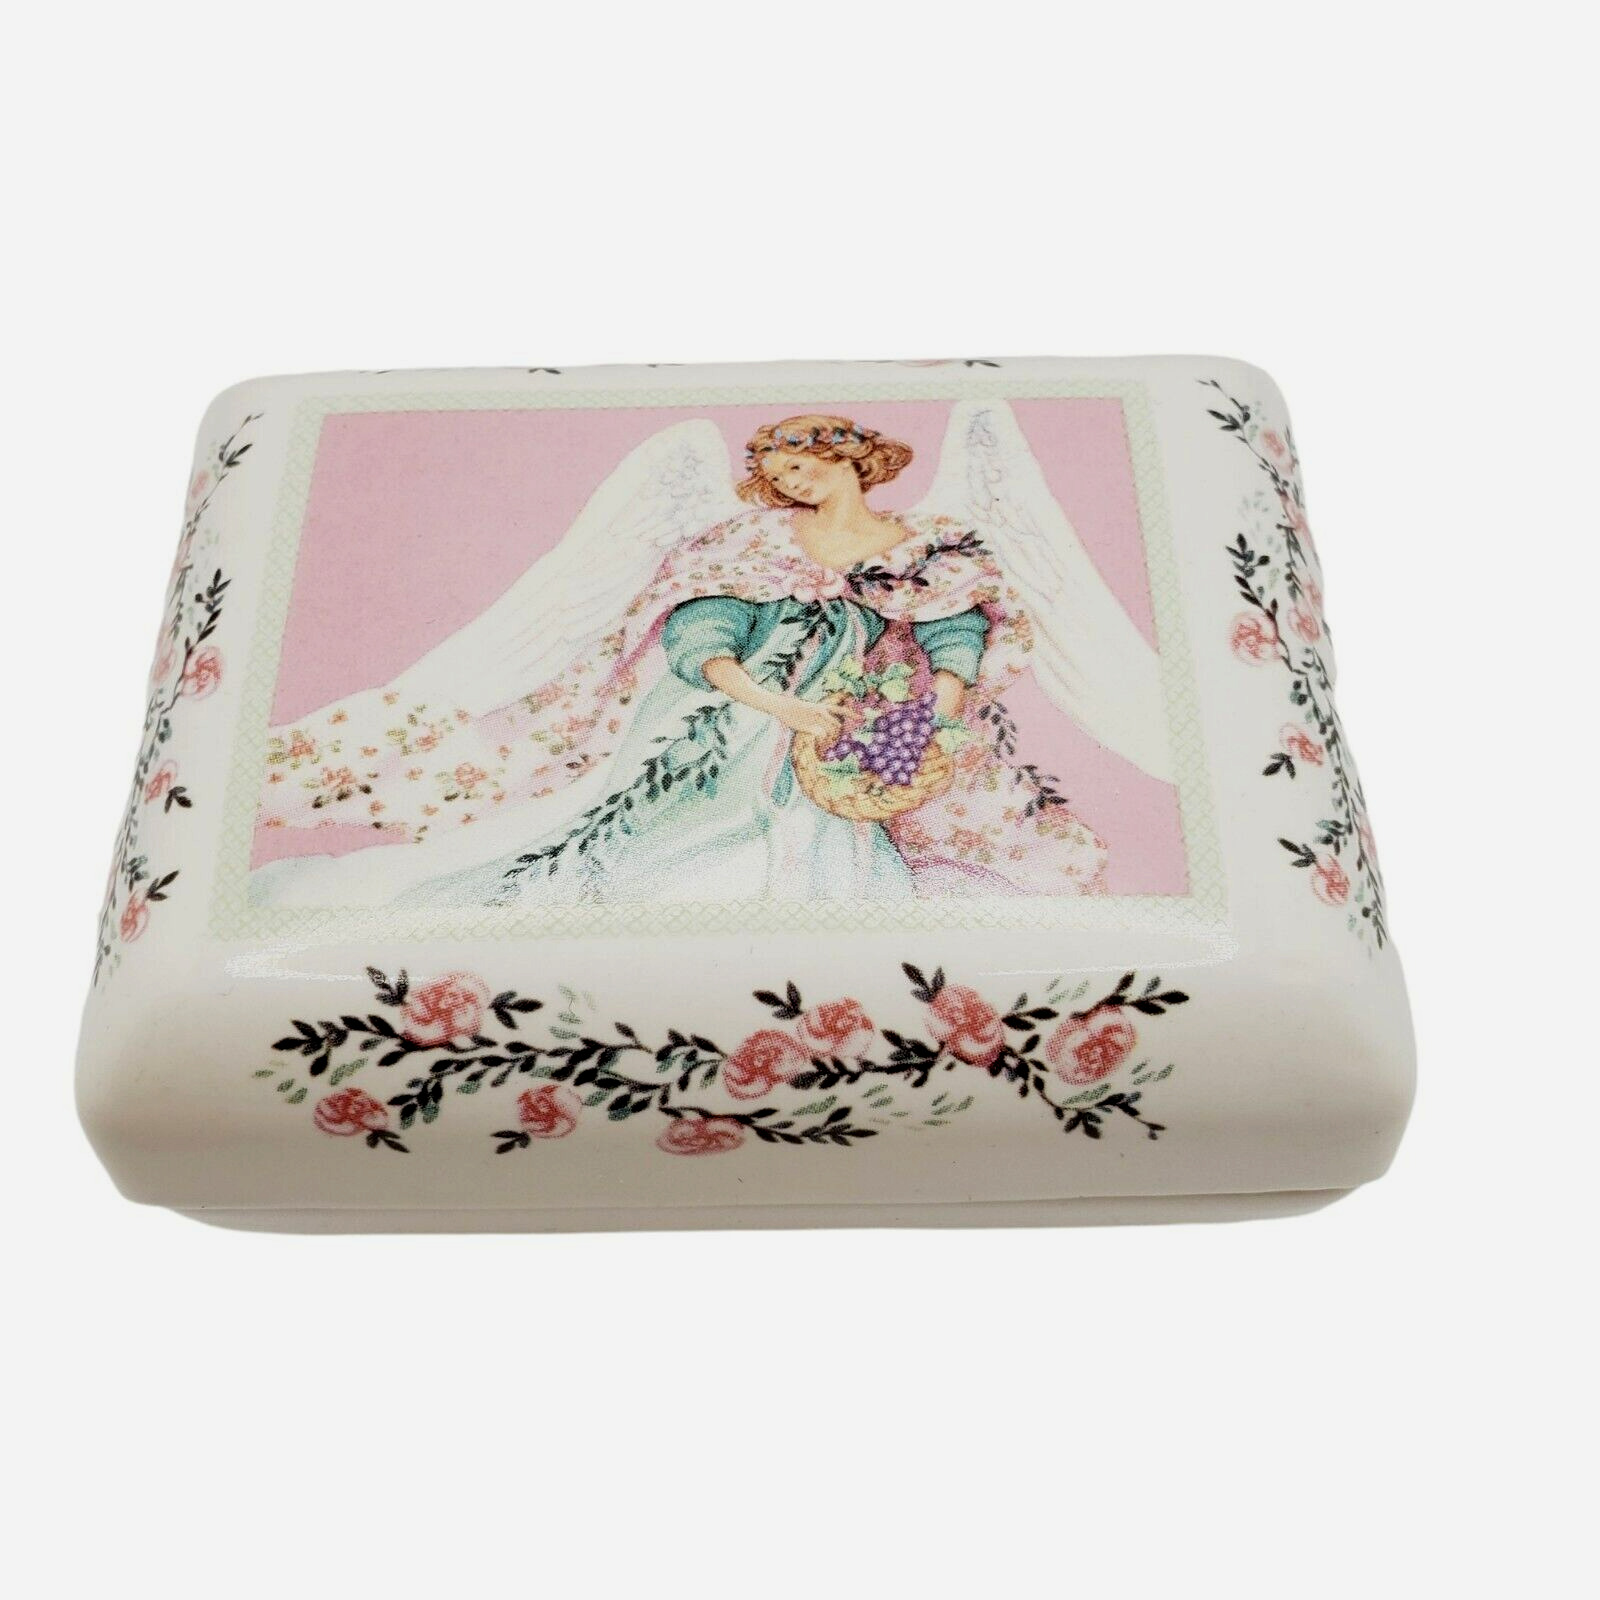 DaySpring Inspirational Cards In Ceramic Angel Trinket Box Pink White 1984